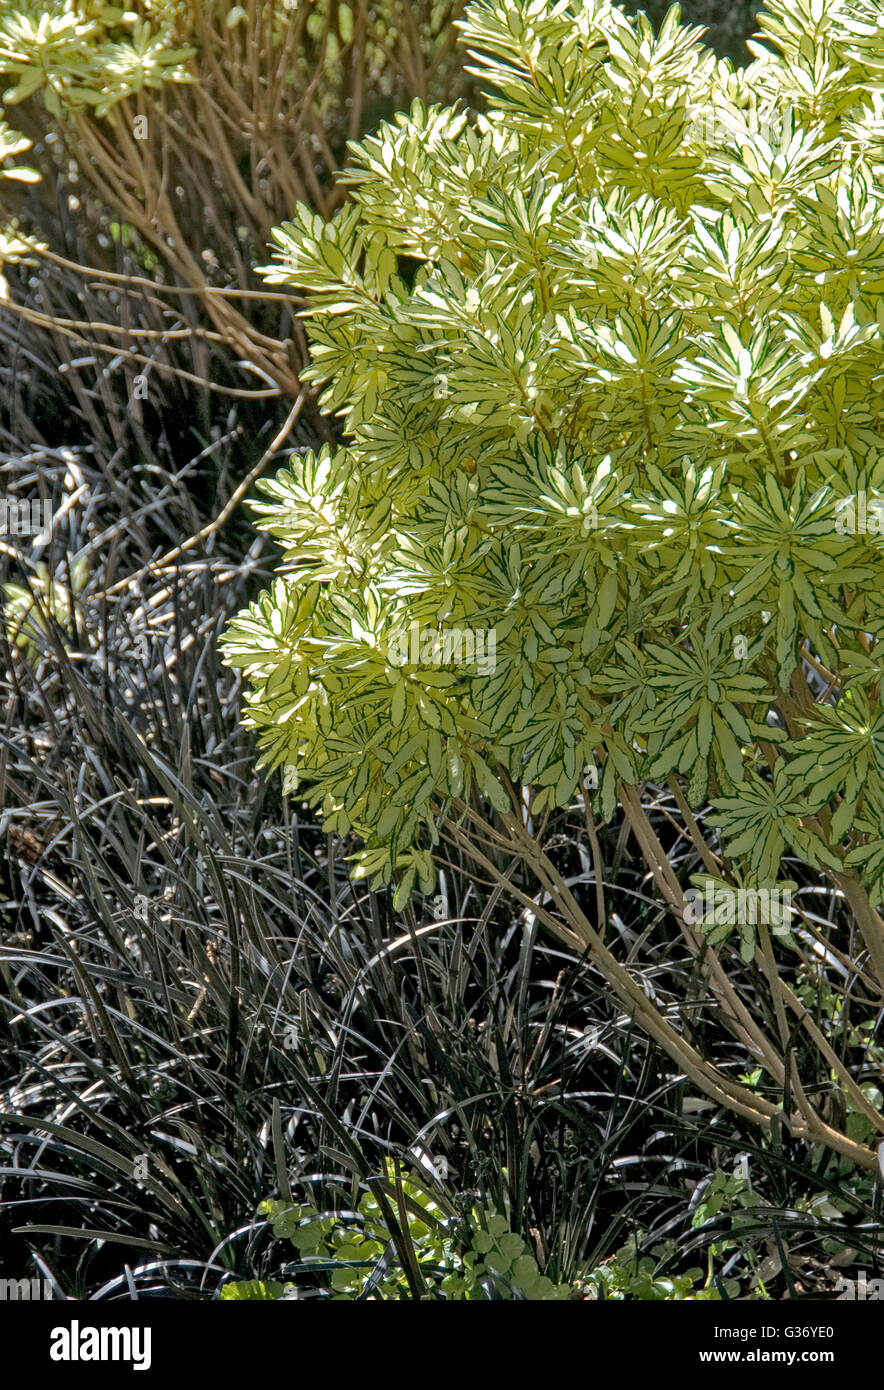 Daphne Briggs Moonlight, Shrub, Black liriope,ophiopogon, Stock Photo